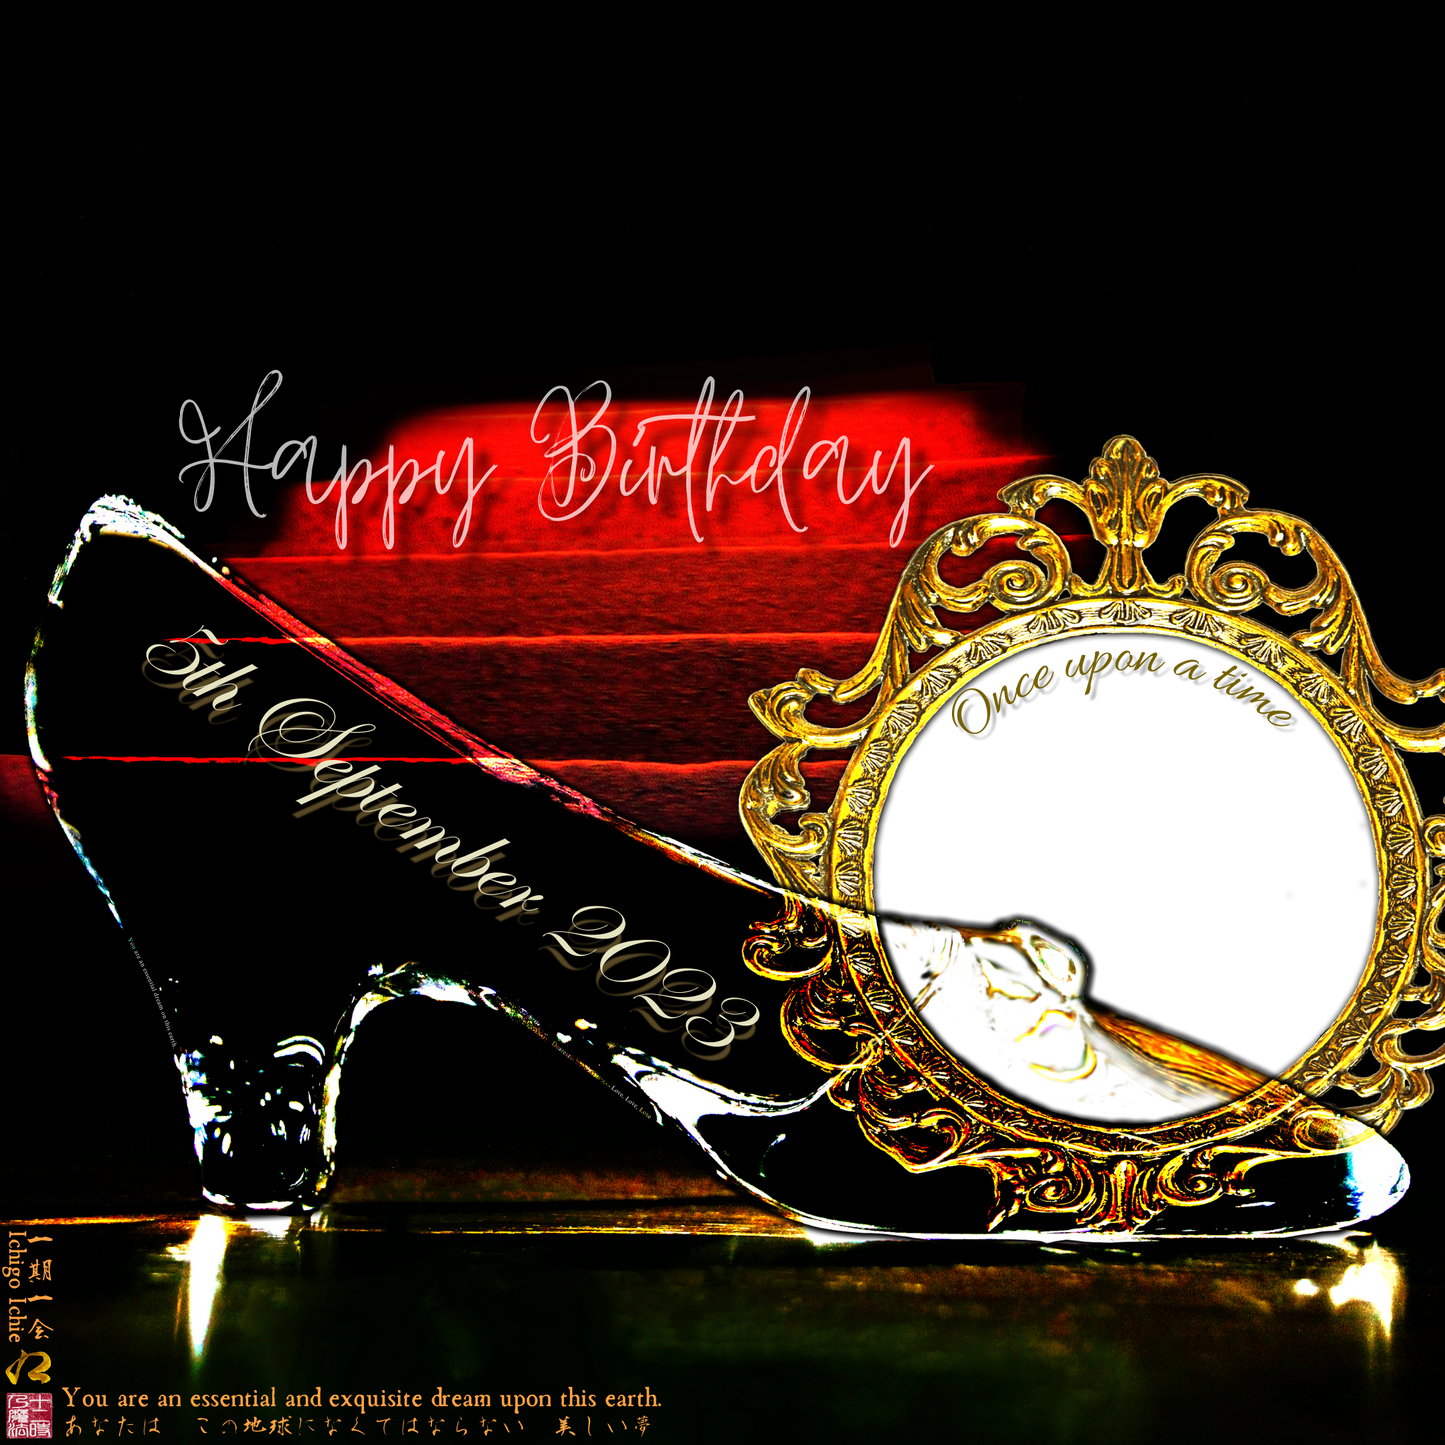 Happy Birthday Glass Slipper "Ichigo Ichie" 5th September 2023 the Right (1-of-1) NFT Art